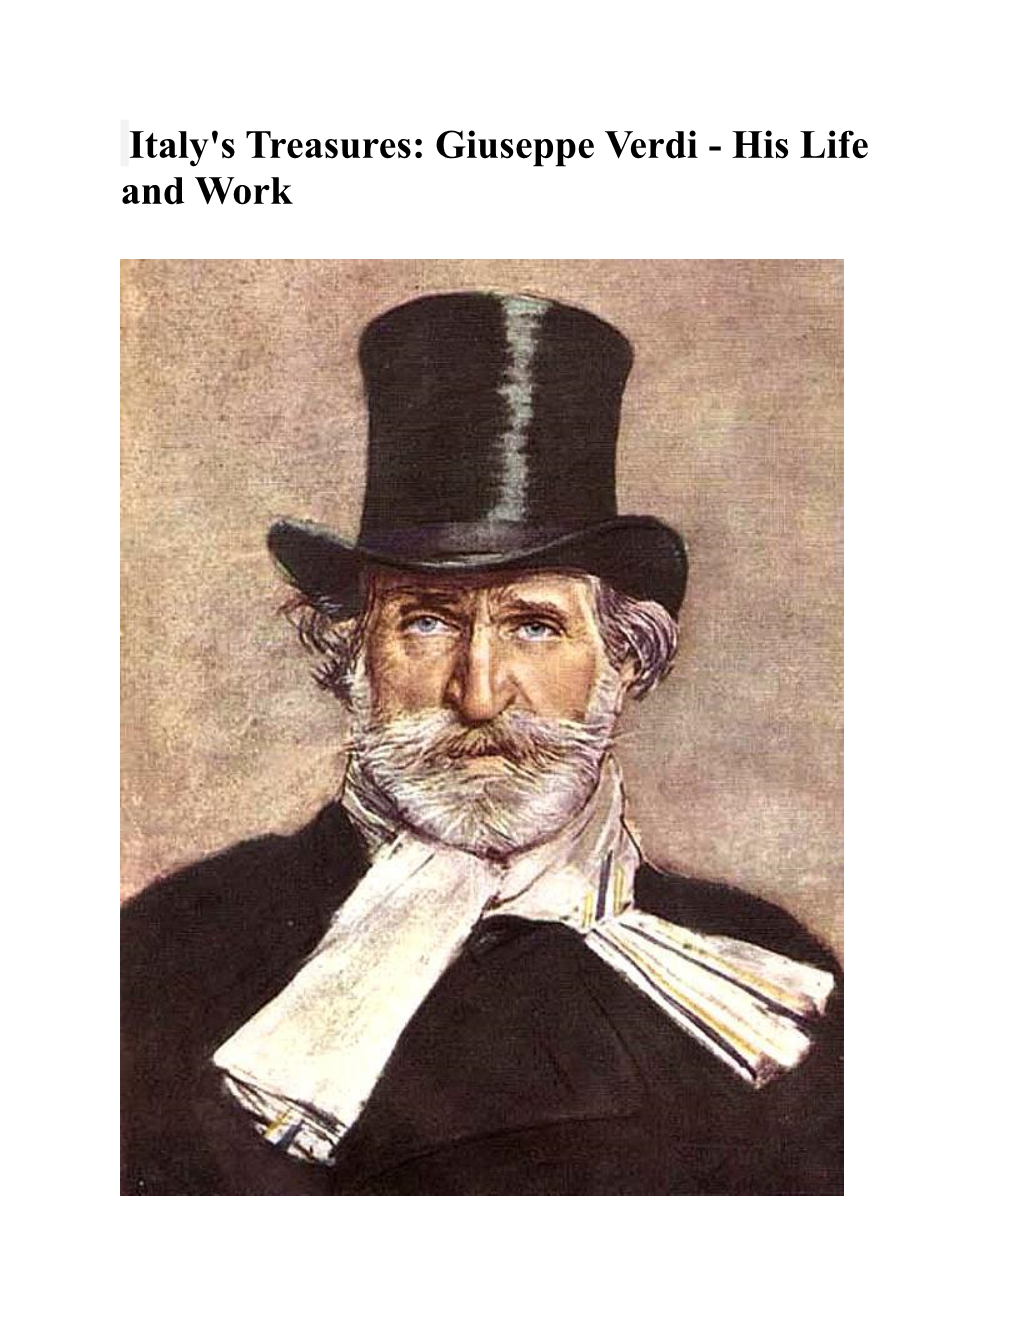 Giuseppe Verdi - His Life and Work